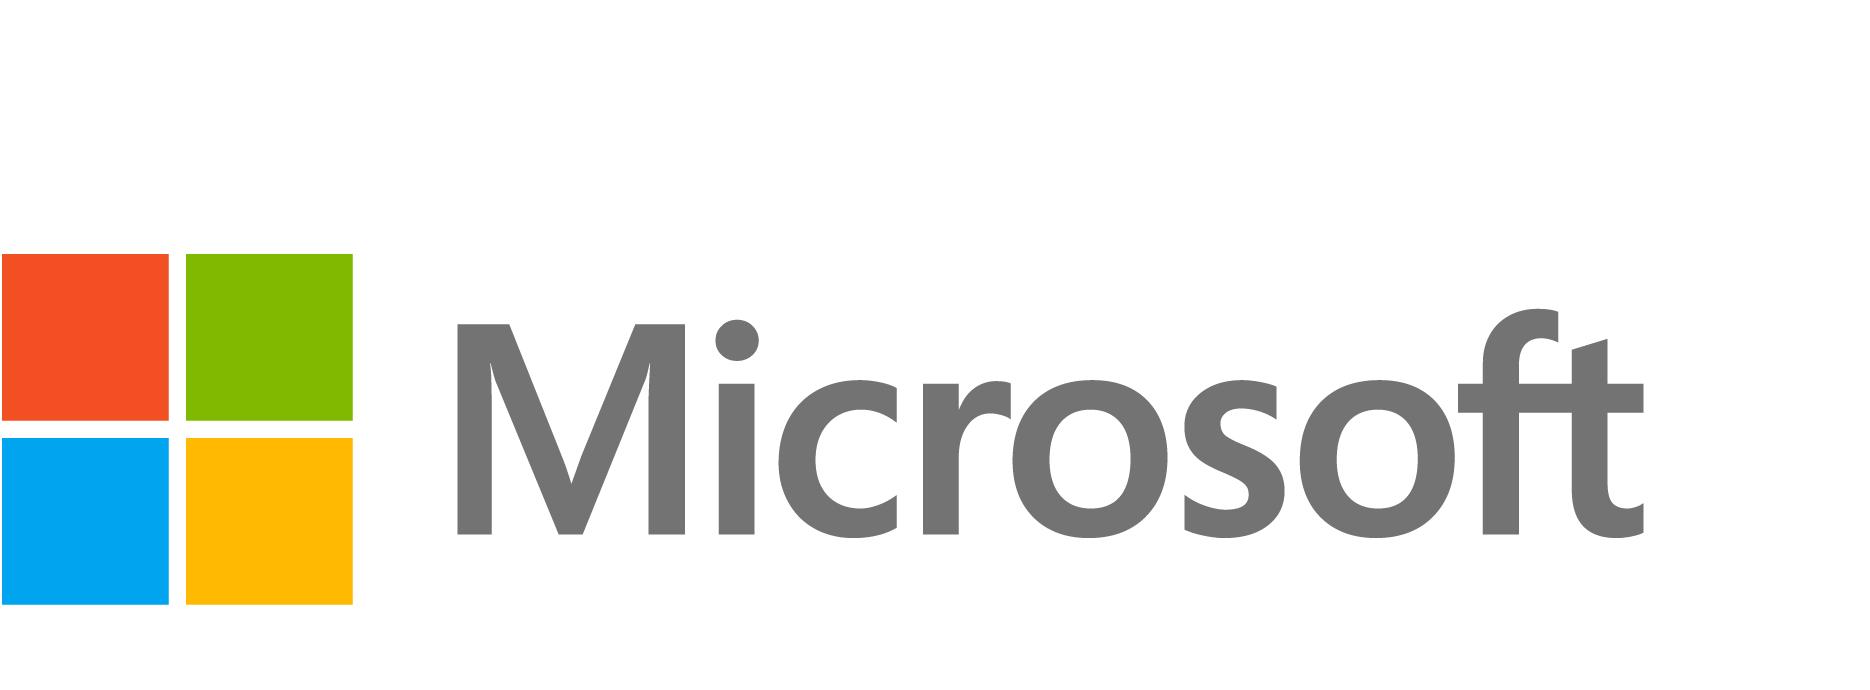 microsoft-logo-png-2411.png